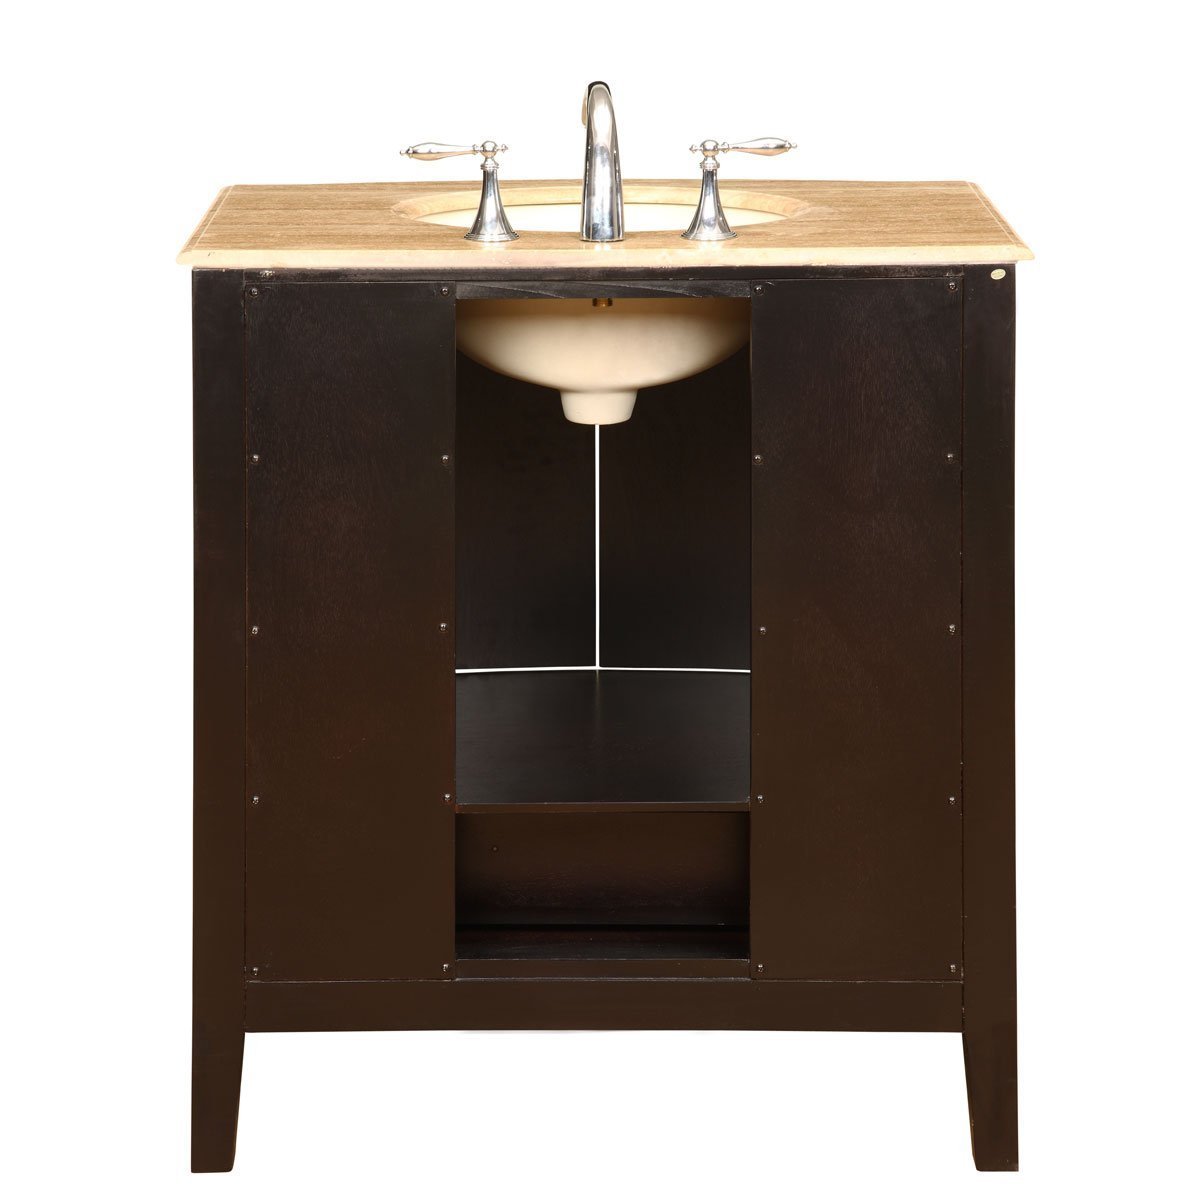 Featured silkroad exclusive hyp 0709 t uic 32 travertine stone top single sink bathroom vanity with furniture cabinet 32 dark wood